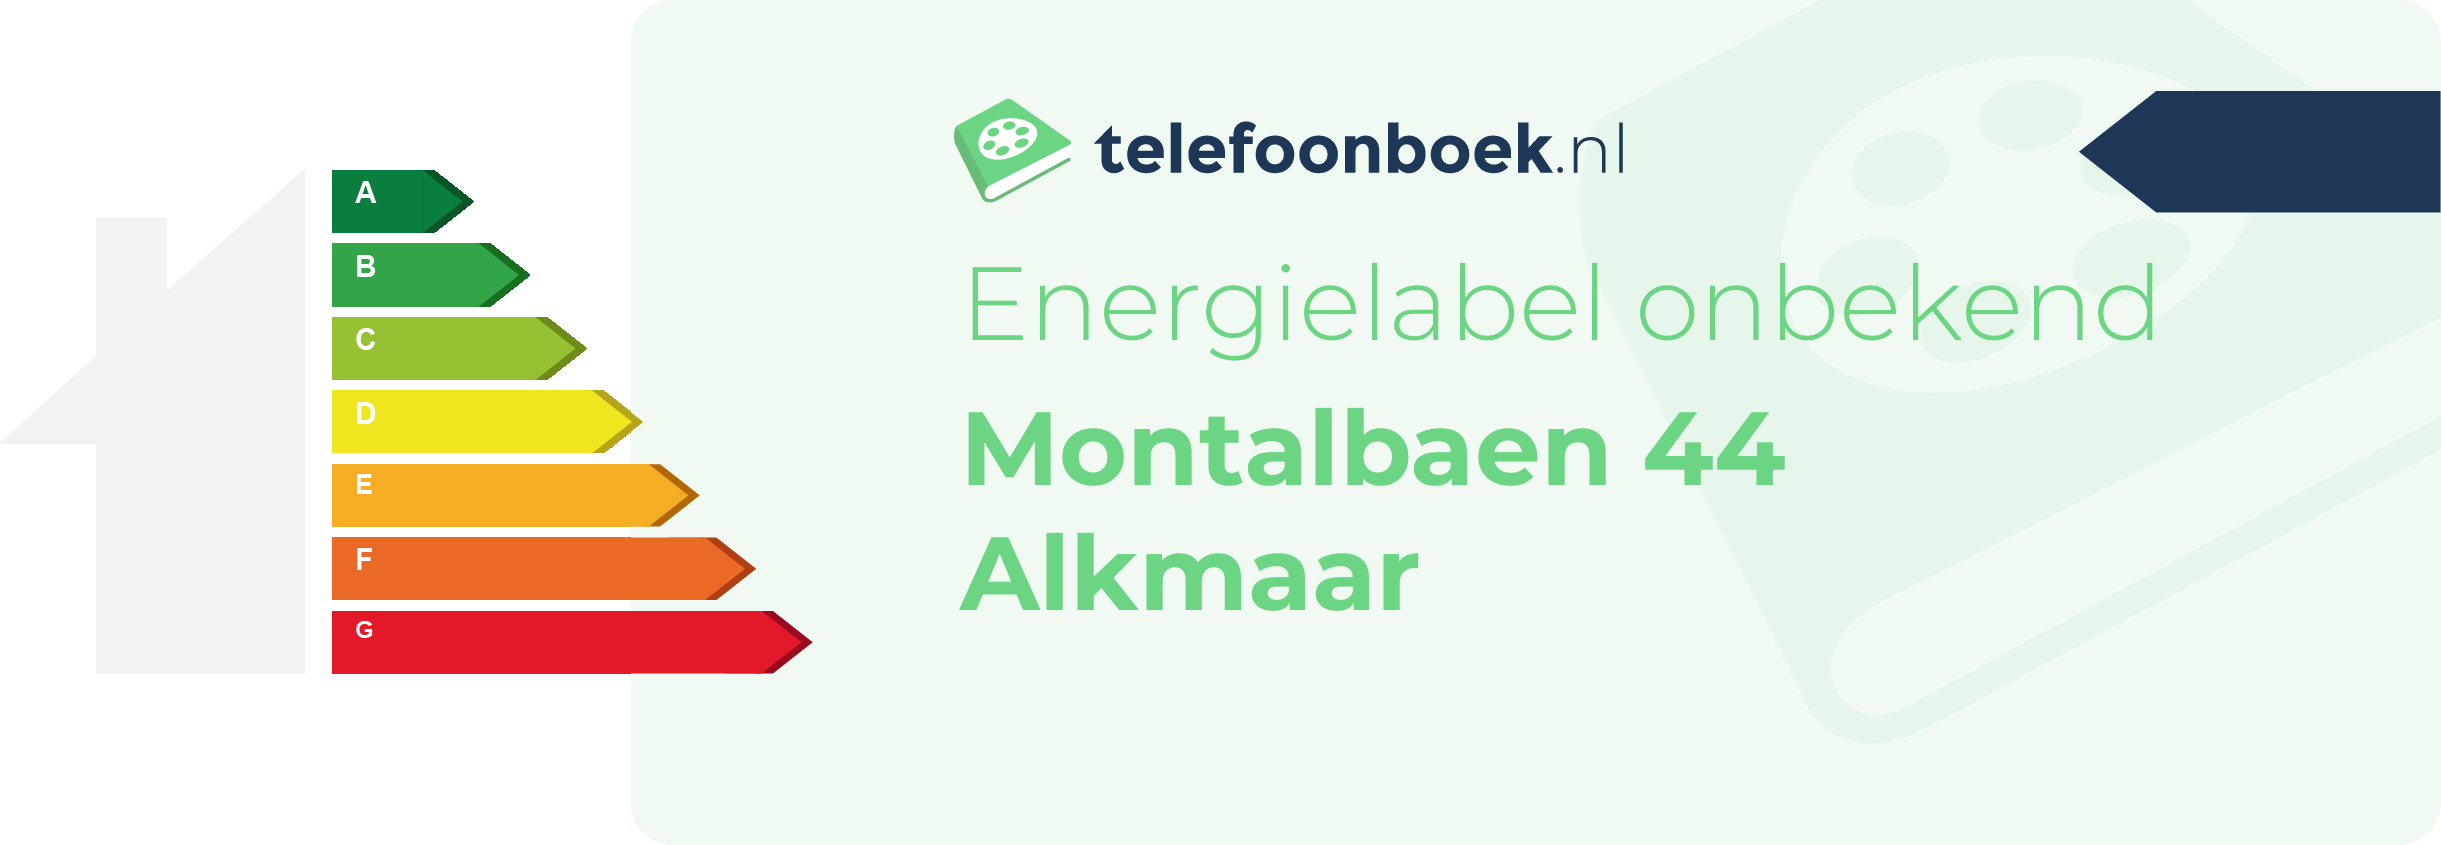 Energielabel Montalbaen 44 Alkmaar